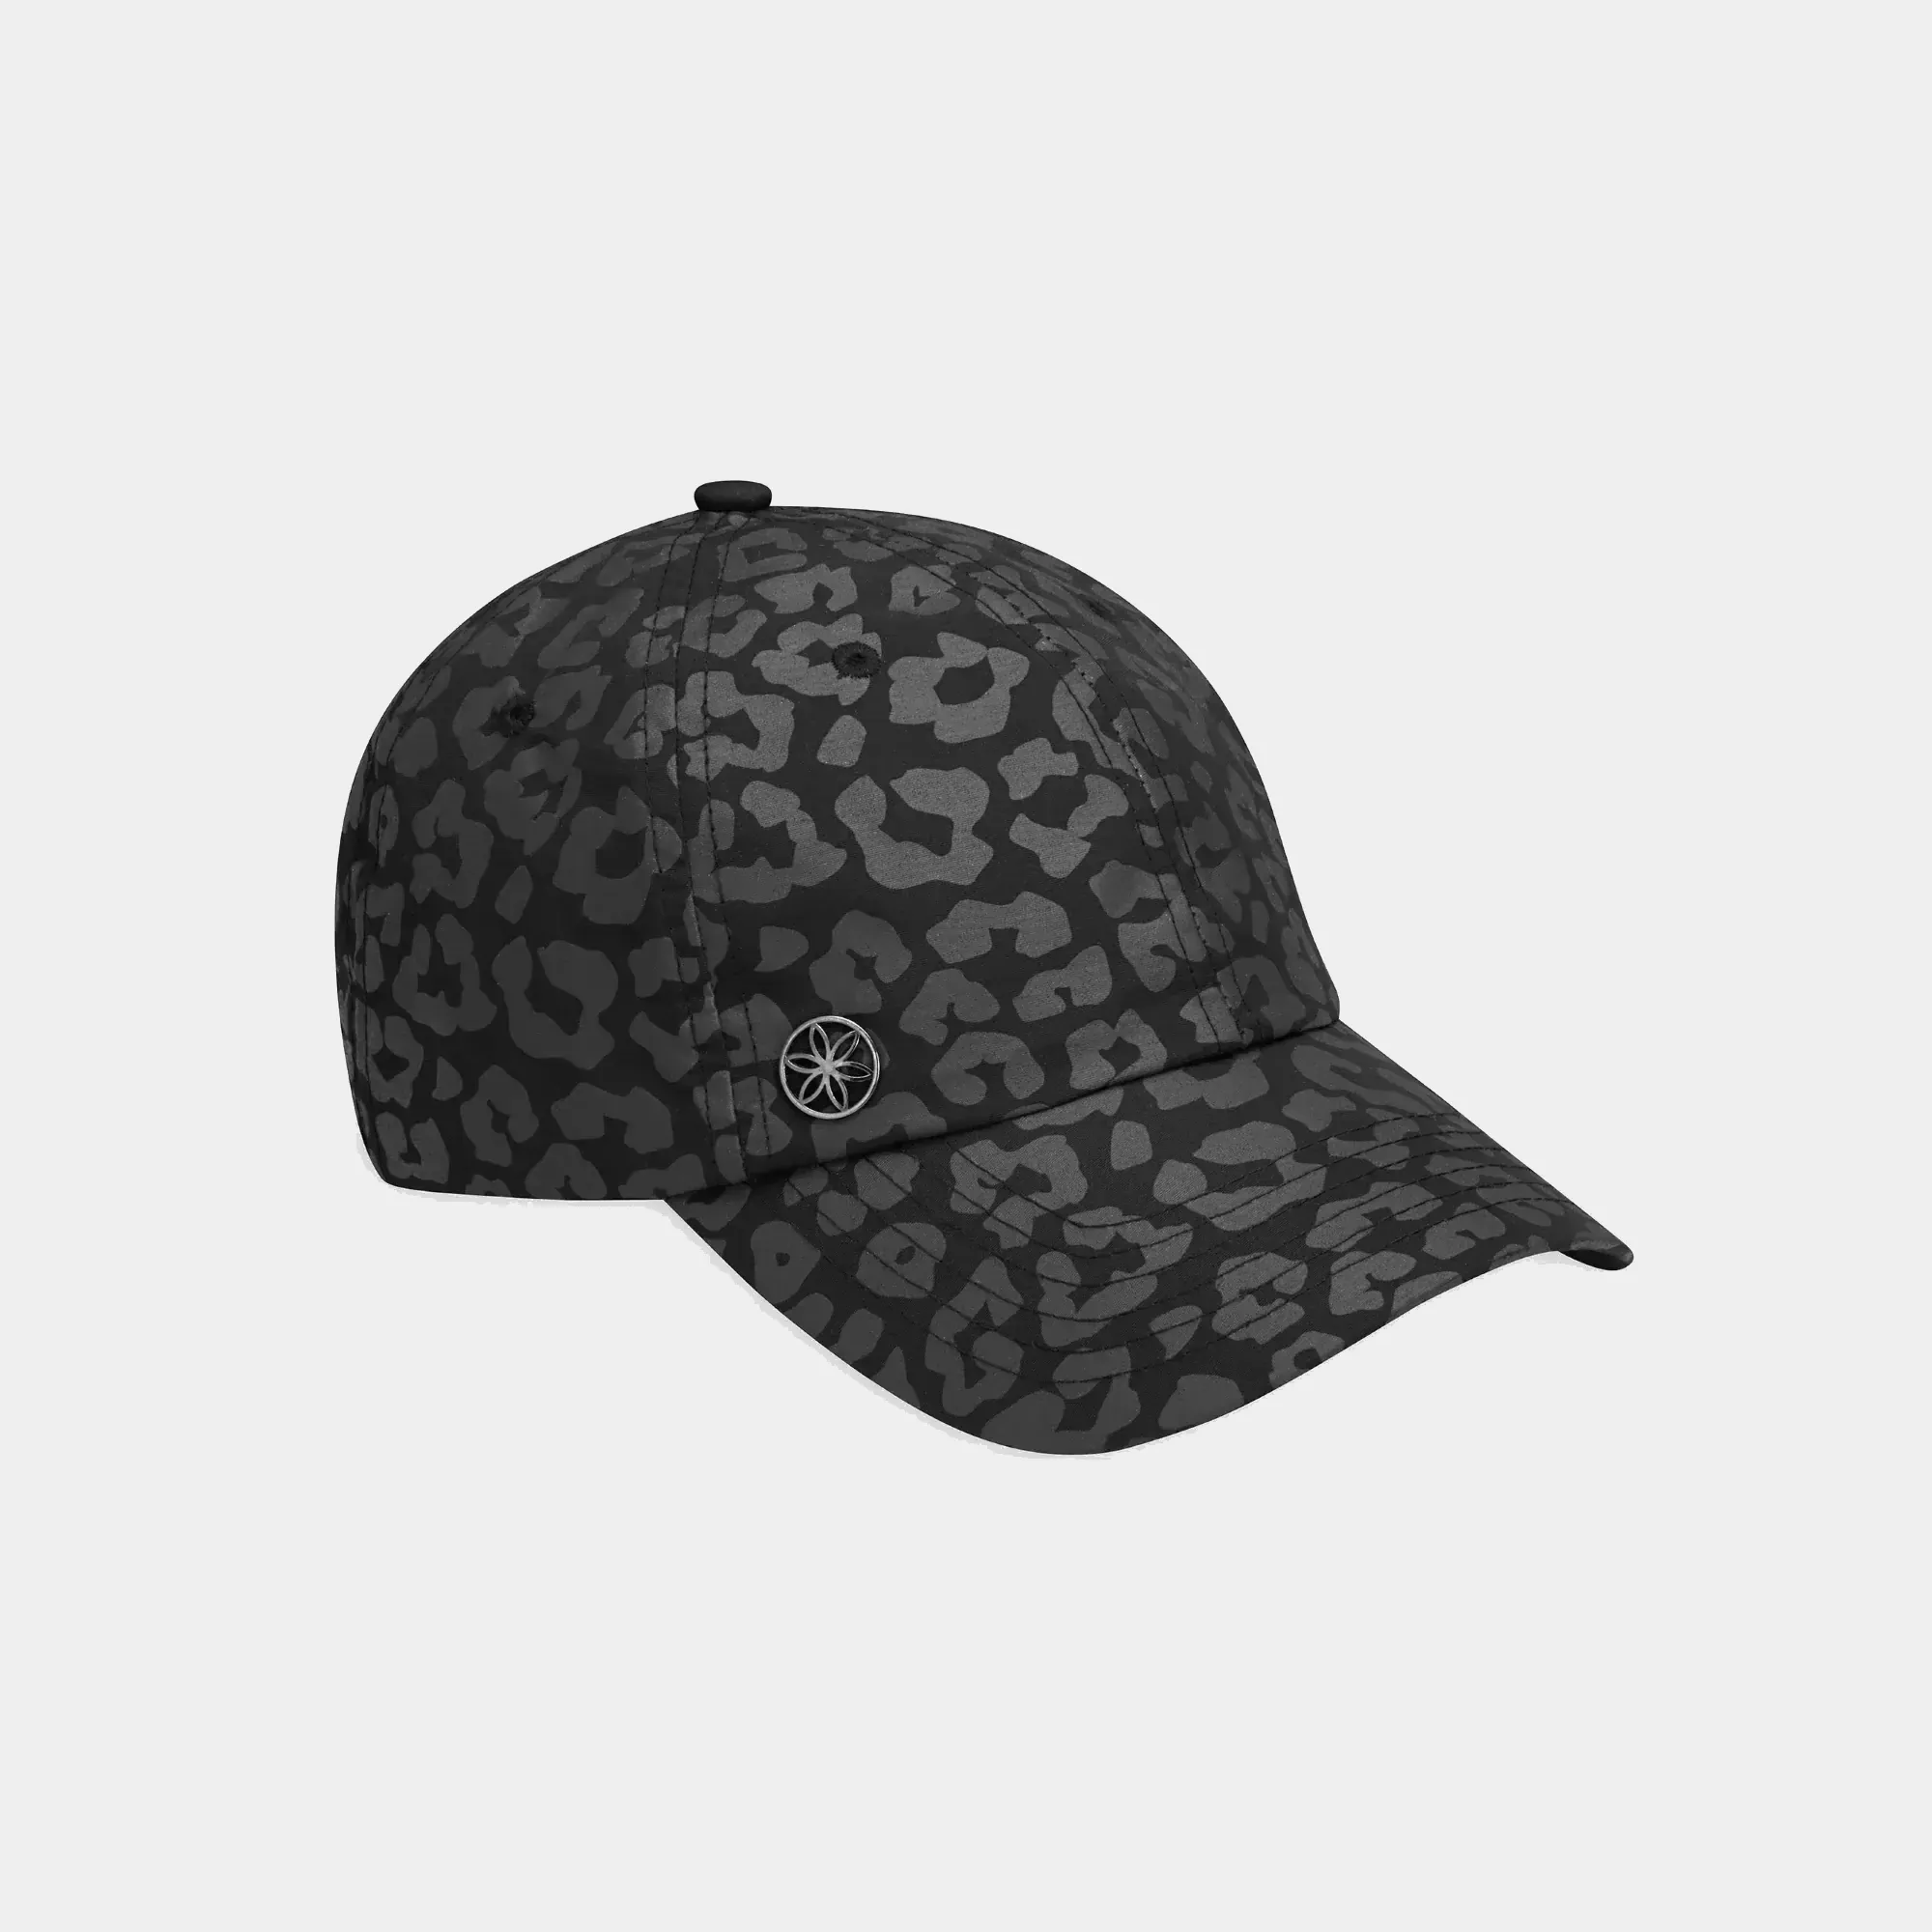 https://mbfitstudio.com/wp-content/uploads/2022/11/g-gaiam-classic-leopard-print-hat-black-2000x2000-1.webp